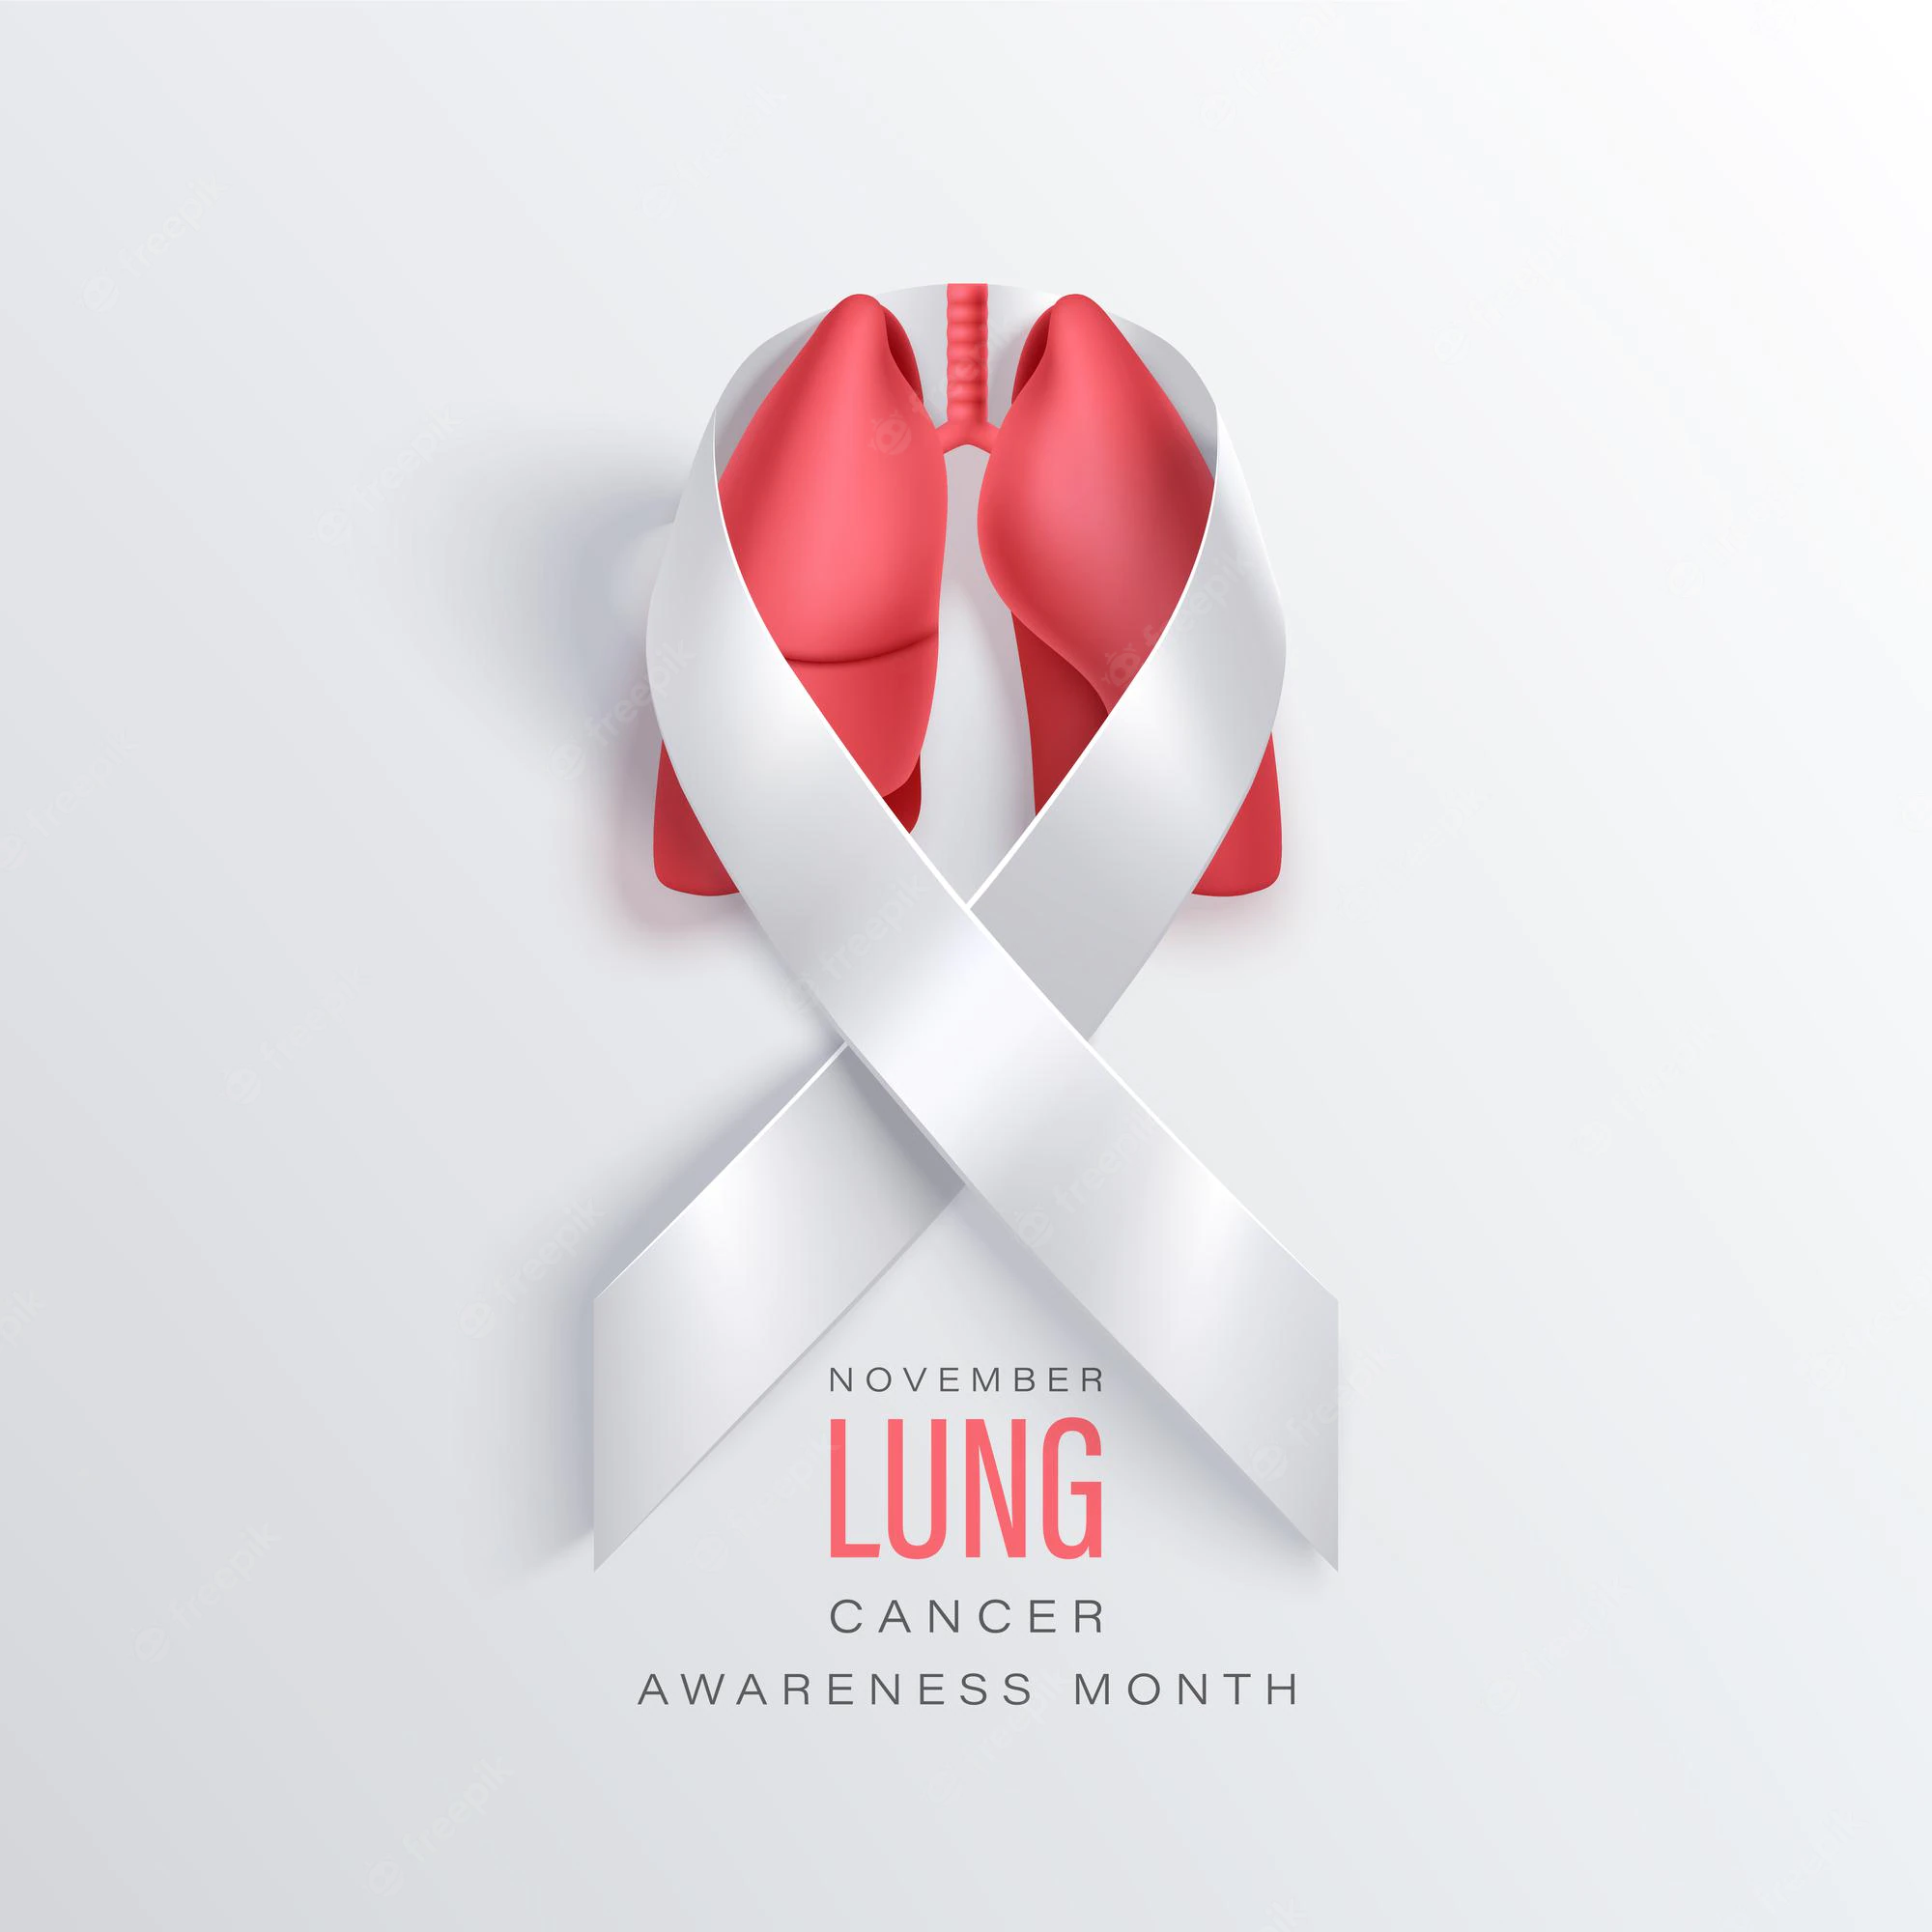 https://worrigeestreetmedical.com.au/wp-content/uploads/2022/10/lung-cancer-awareness-month-vector-banner_267960-415.webp